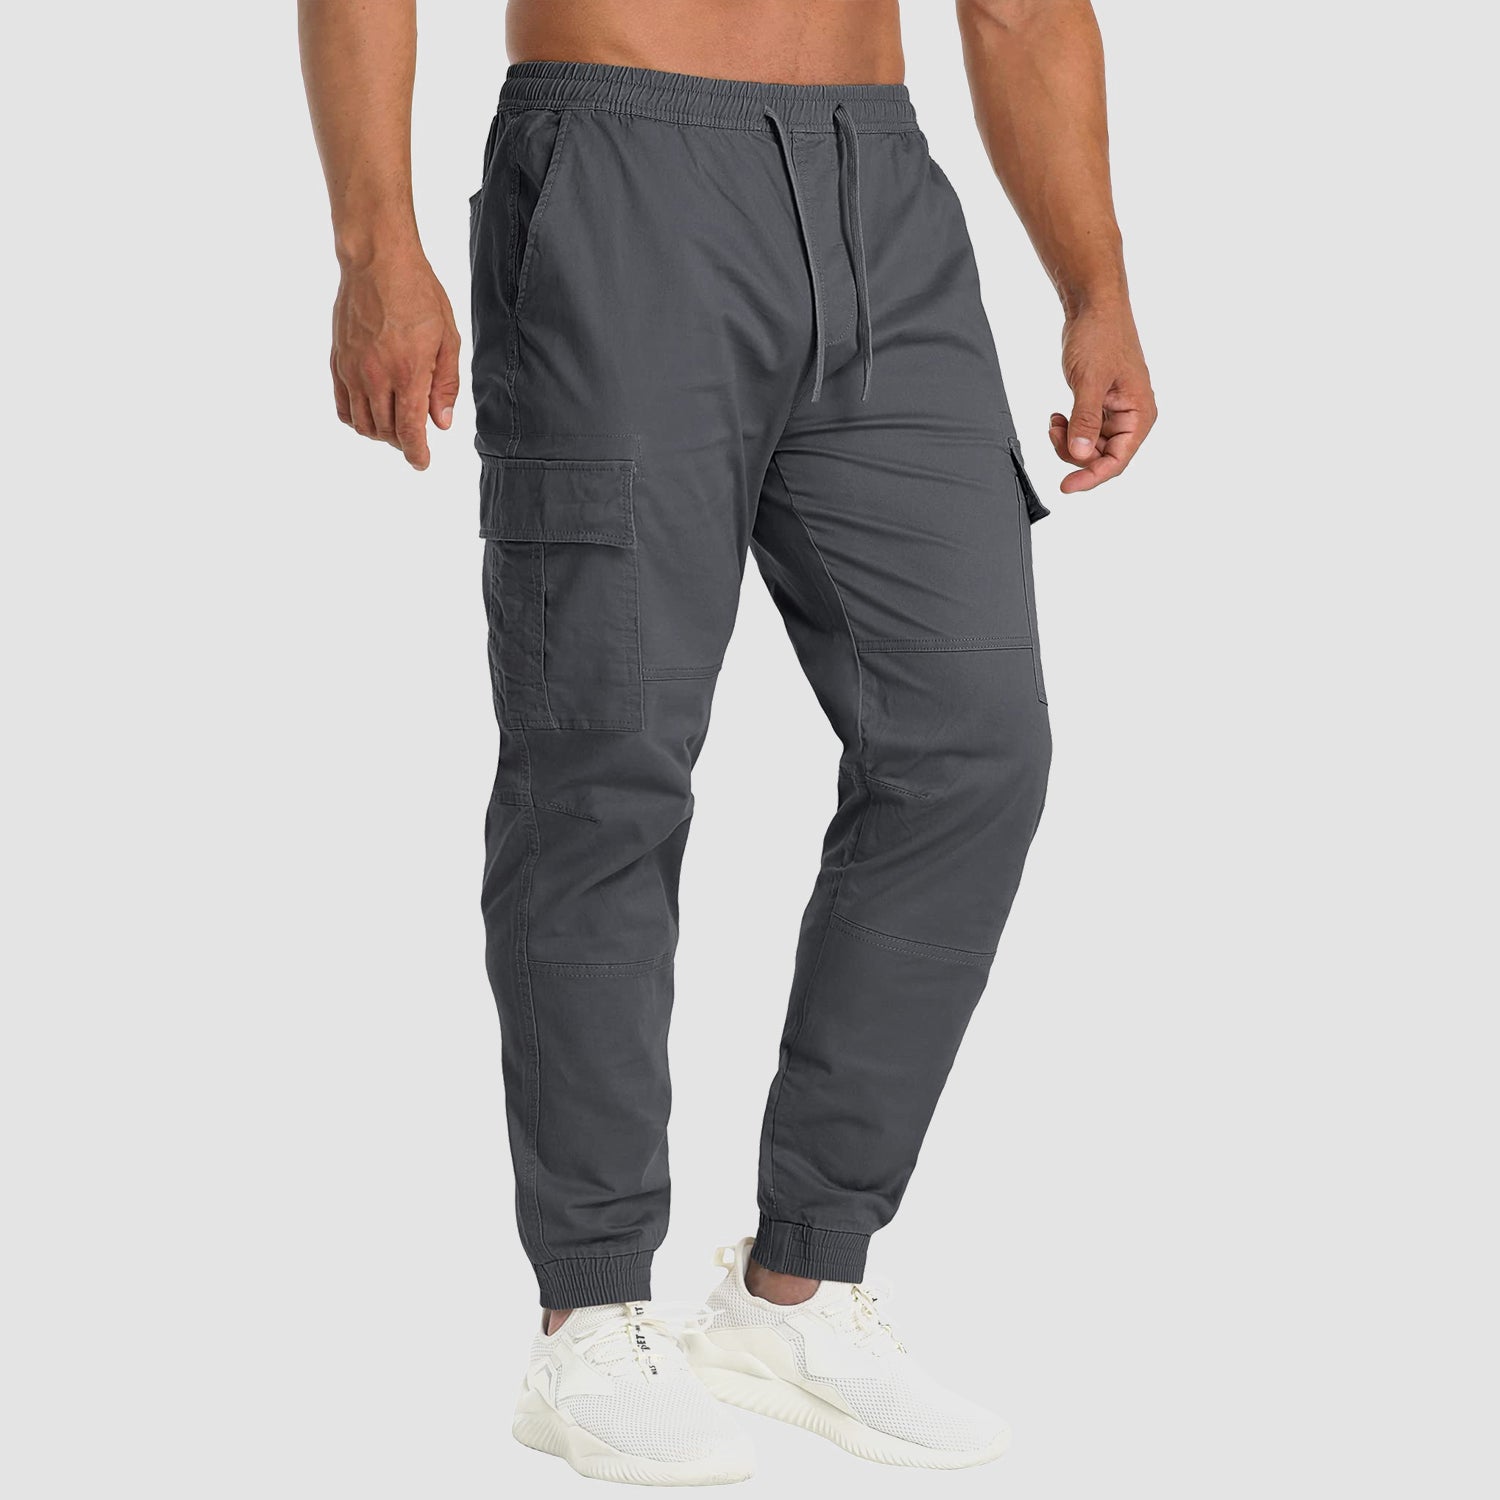 Men Loose Cargo Pants Combat Baggy Fishing Trousers Elastic Waist Work Wear  | eBay